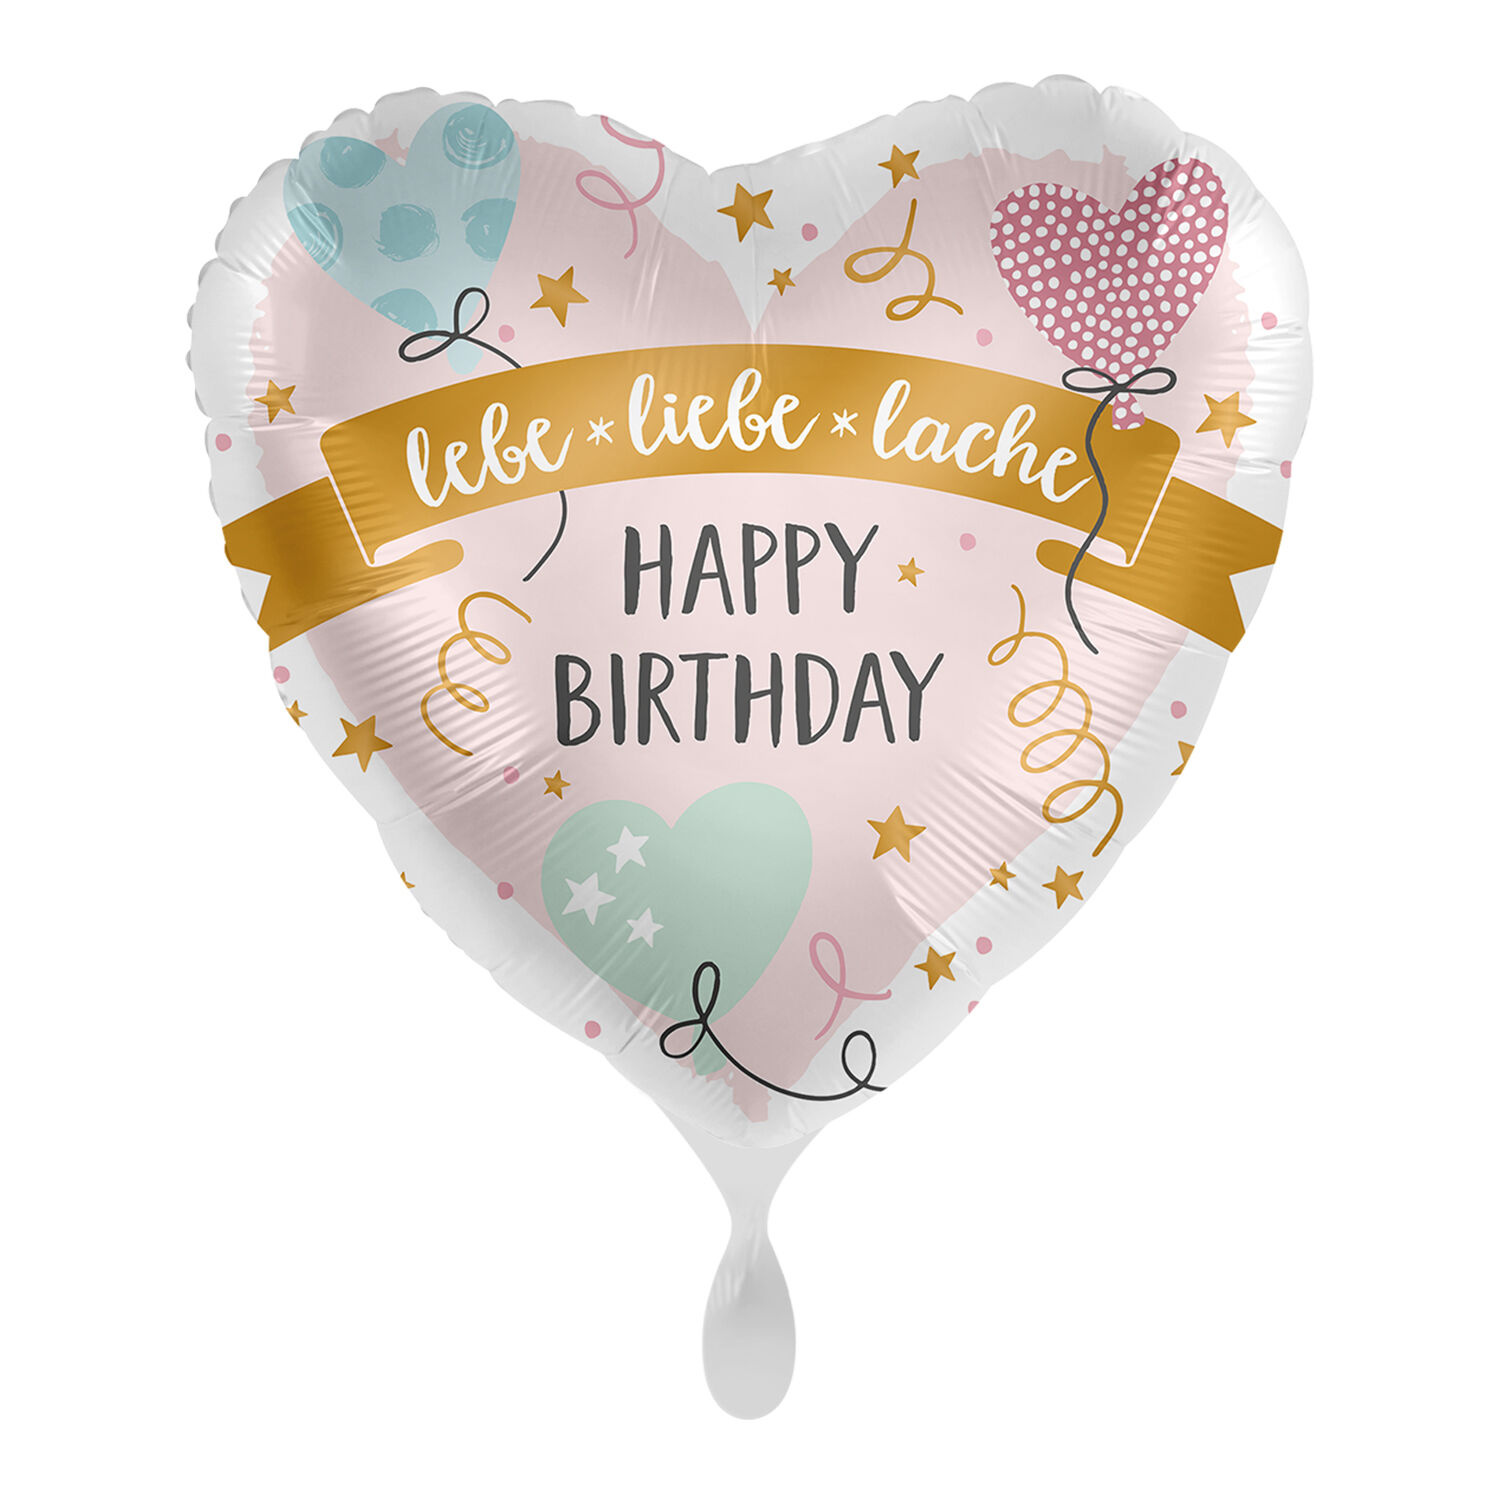 NEU Folienballon - lebe liebe lache Happy Birthday - ca. 45cm Durchmesser